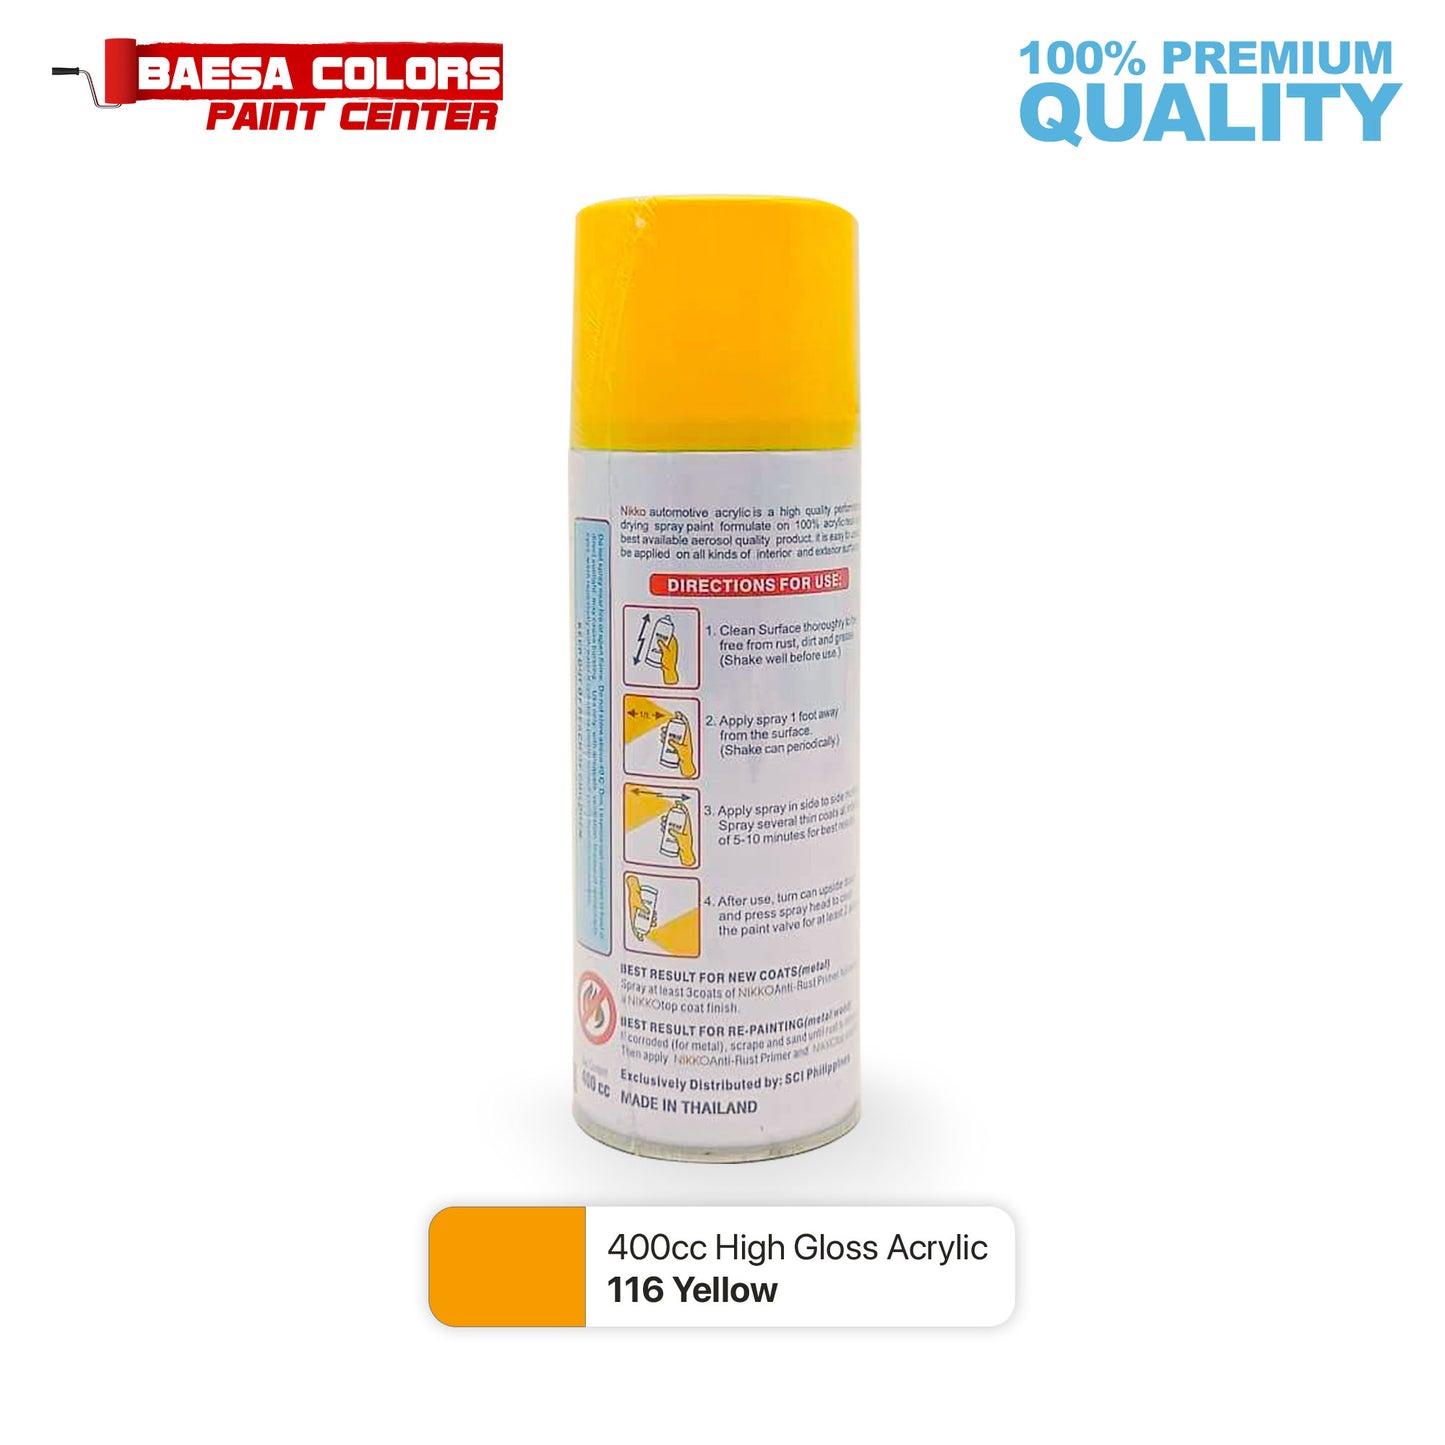 Nikko Acrylic-Based Spray Paint 116 Yellow 400cc